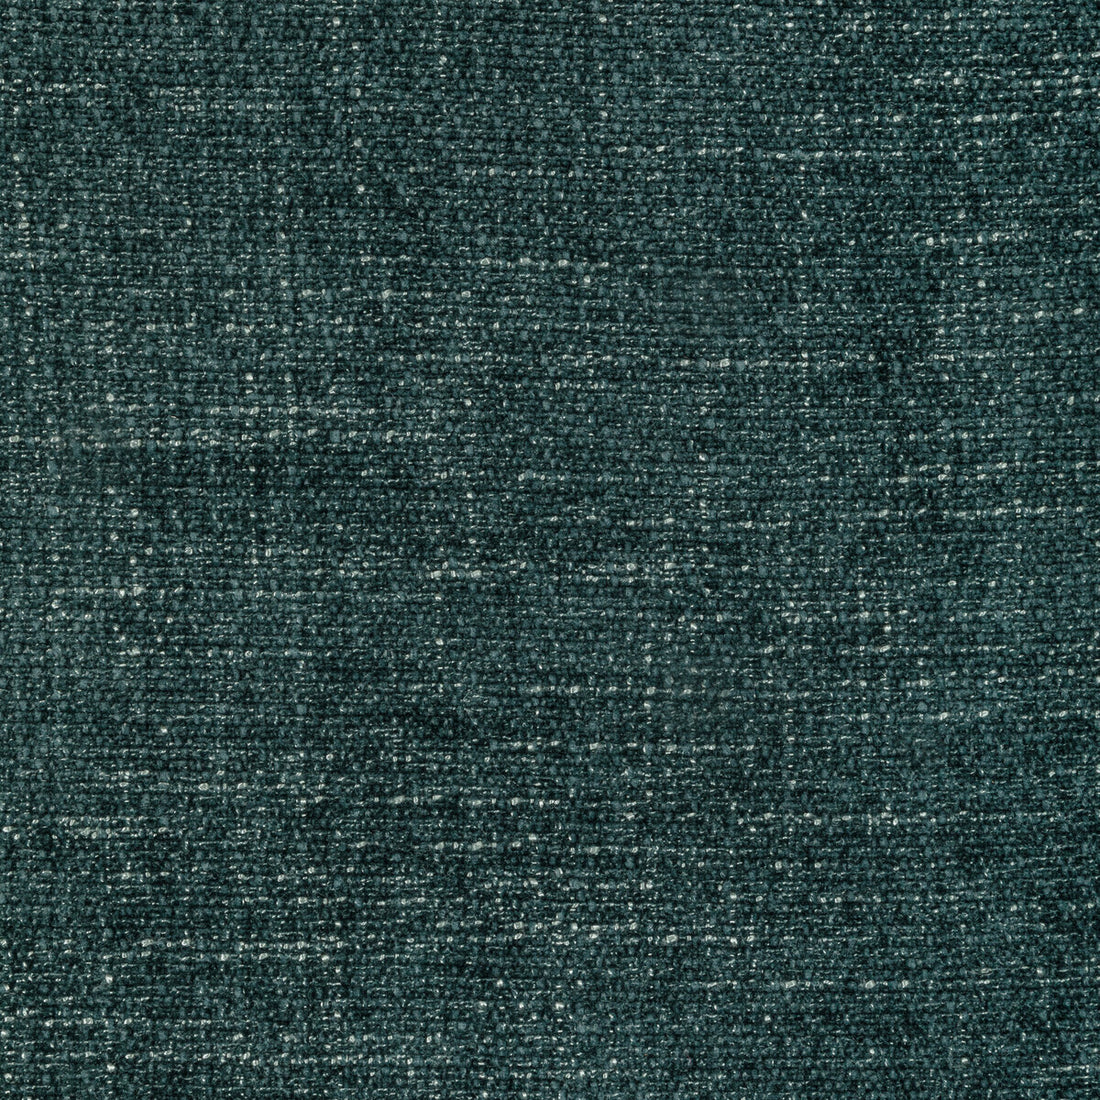 Kravet Smart fabric in 36578-313 color - pattern 36578.313.0 - by Kravet Smart in the Performance Kravetarmor collection